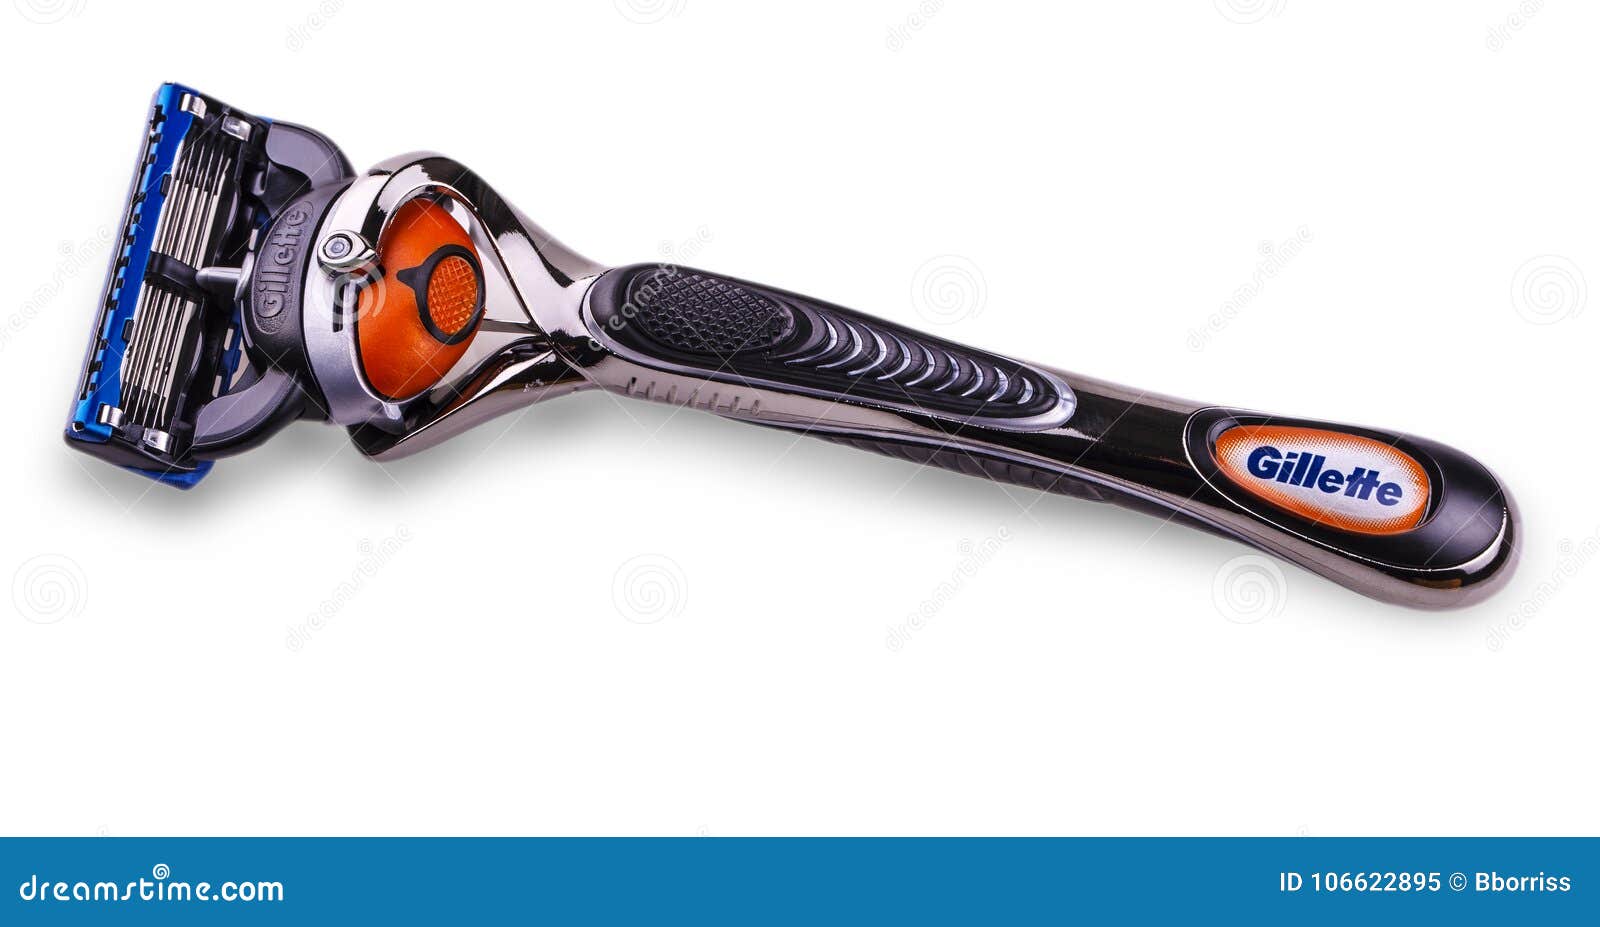 Gillette Fusion Proglide Razor Blades for Shaving Editorial Image - Image  of cosmetics, equipment: 106622895